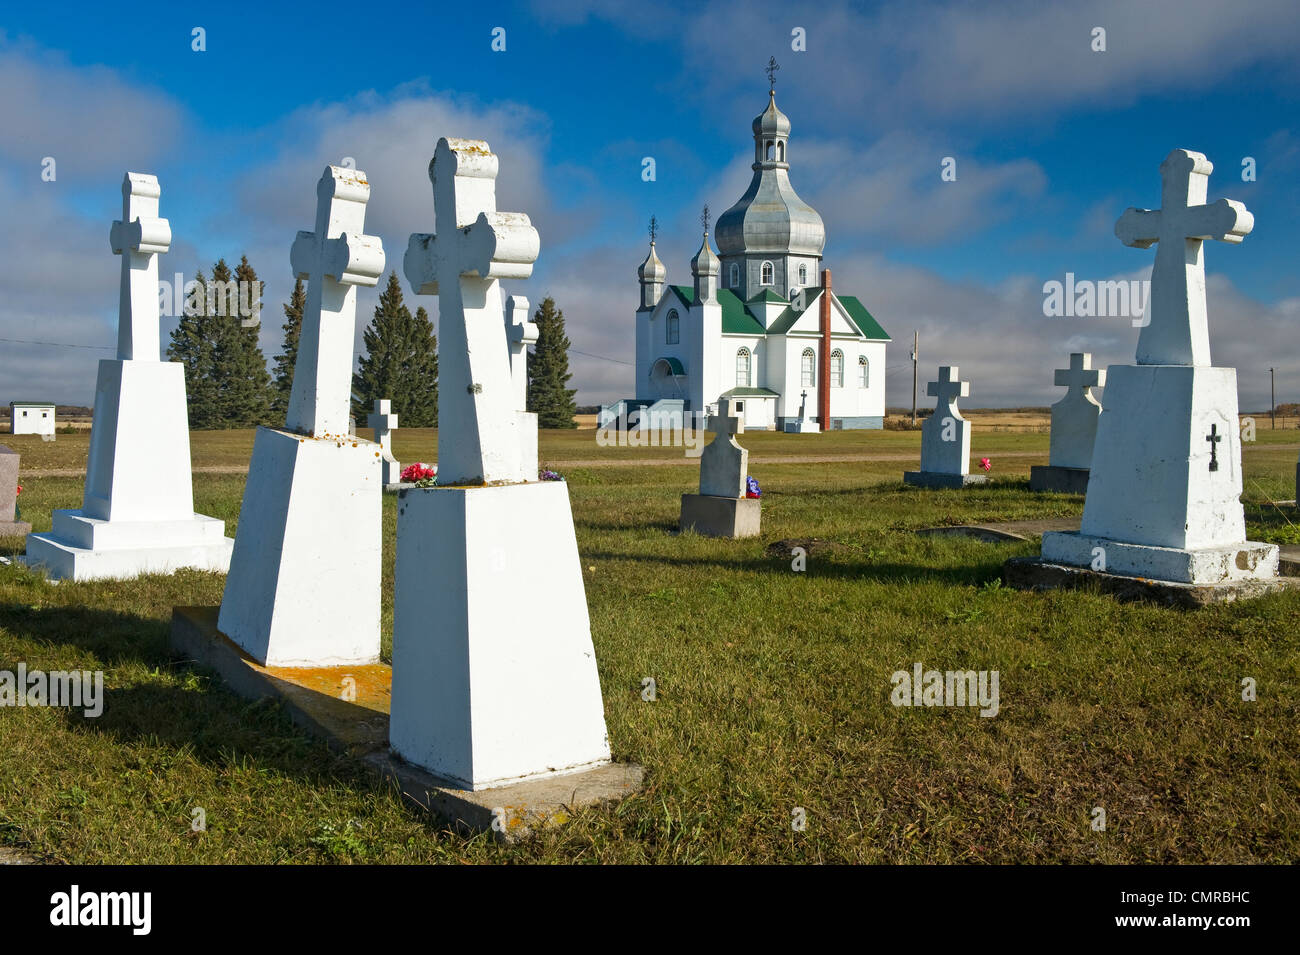 Ukrainian Orthodox Church and gravestones, Insinger, Saskatchewan Stock Photo